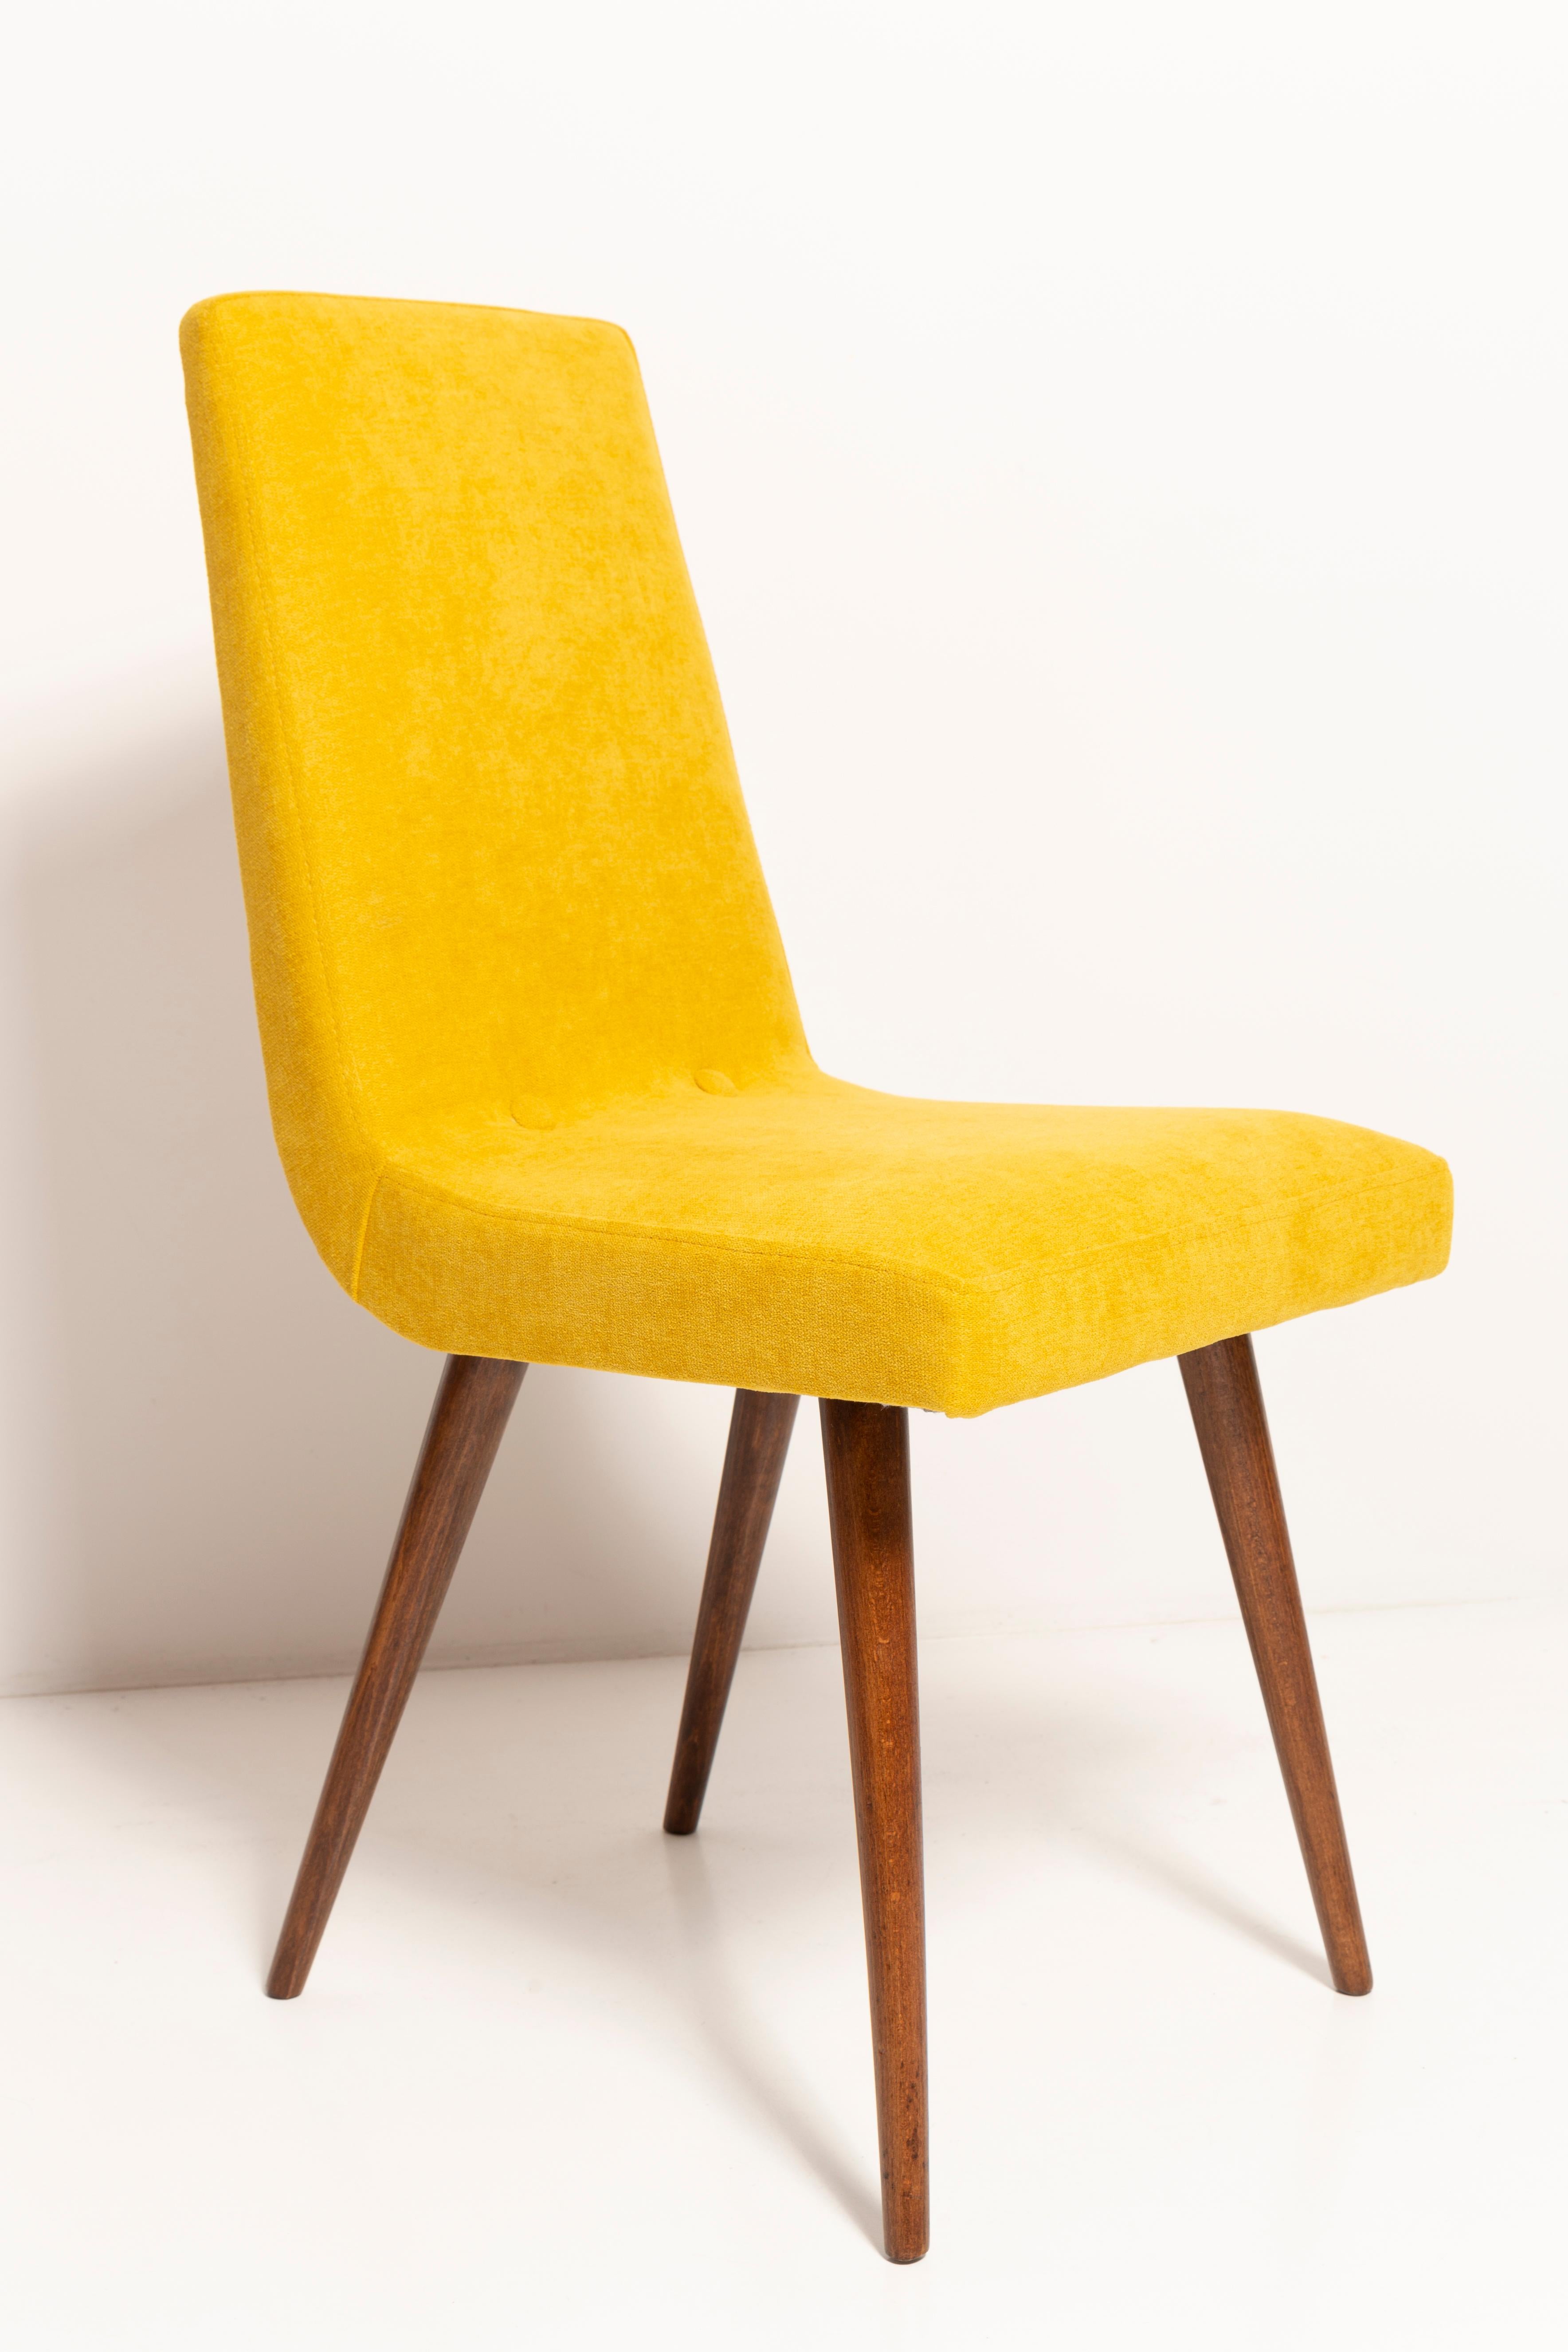 Polish Six 20th Century Mustard Yellow Wool Chair, Rajmund Halas Europe, 1960s For Sale